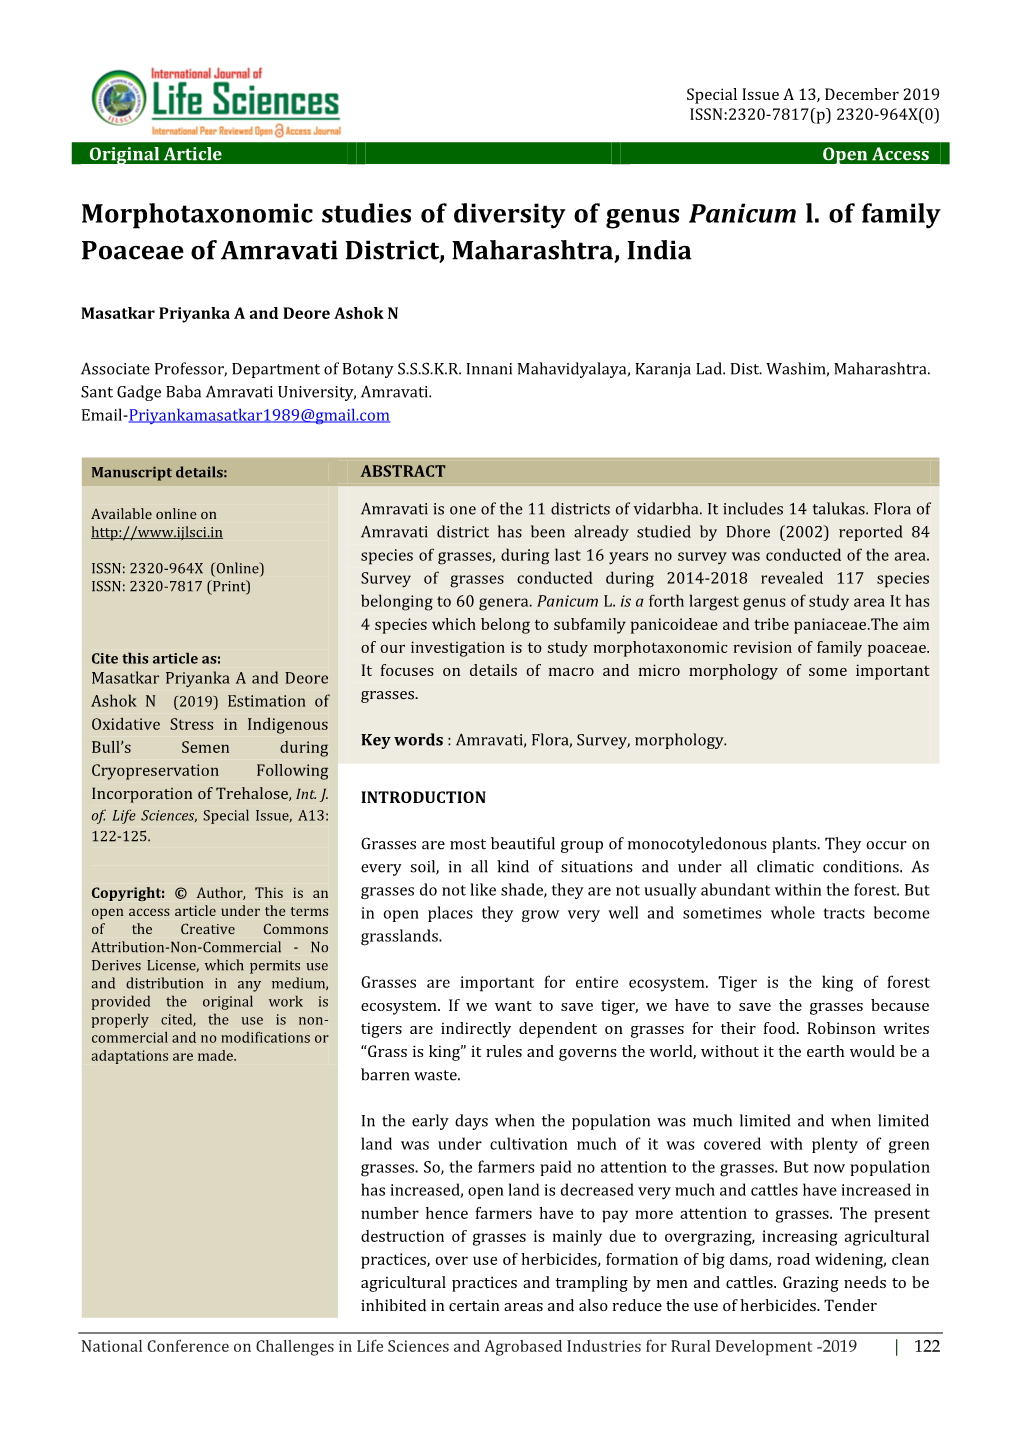 Morphotaxonomic Studies of Diversity of Genus Panicum L. of Family Poaceae of Amravati District, Maharashtra, India